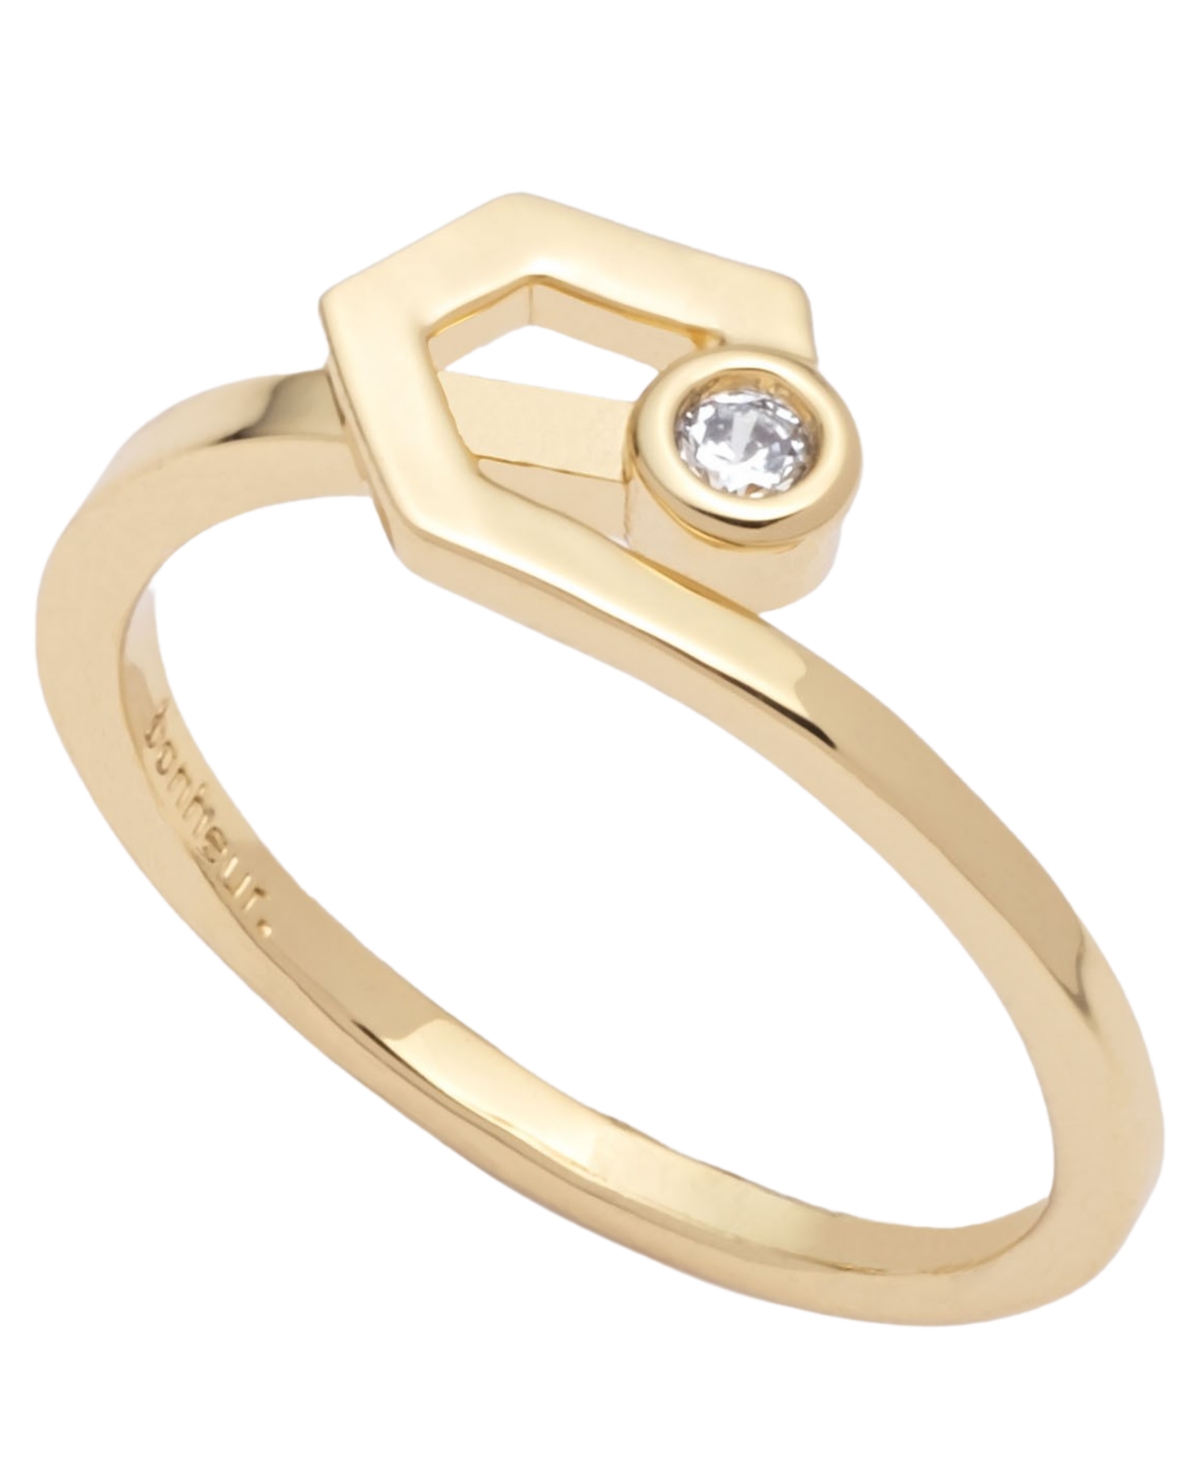 Bonheur Jewelry Julien Floating Bezel Ring In Karat Micro Plated Gold Over Brass